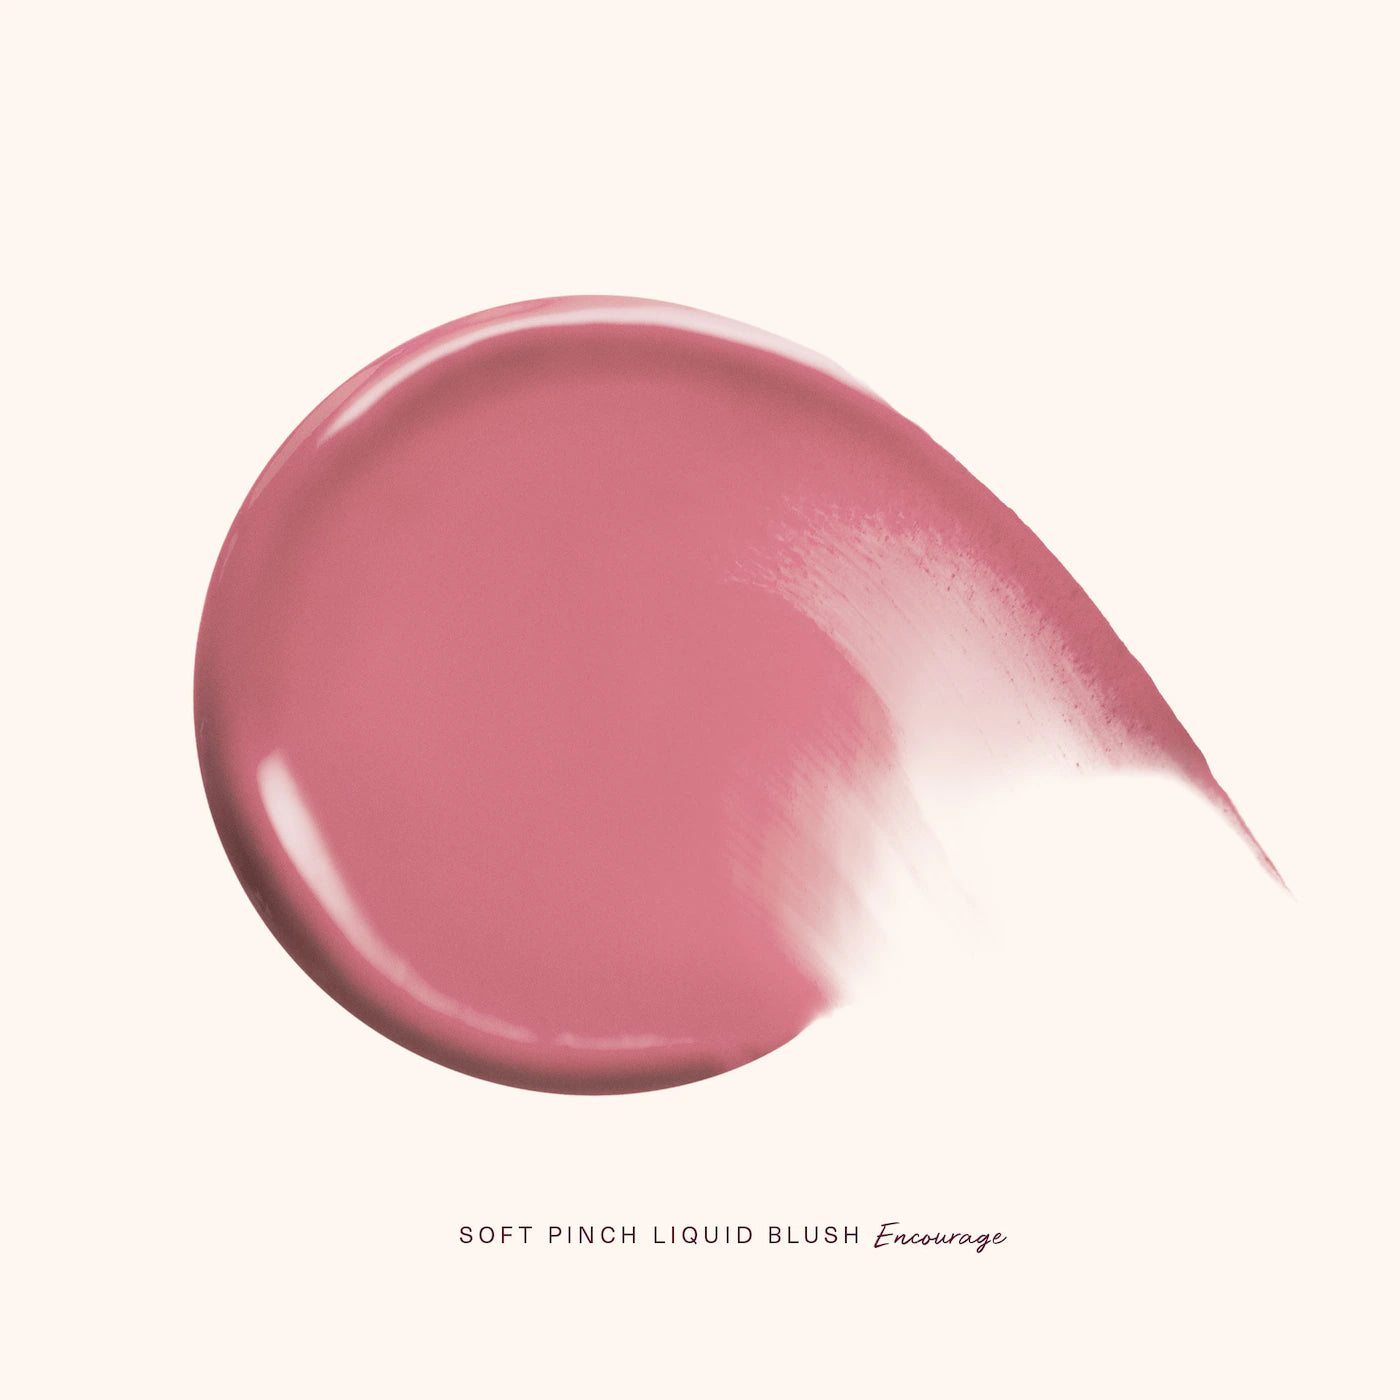 Rare Beauty by Selena Gomez | Mini Soft Pinch Liquid Blush | Encourage